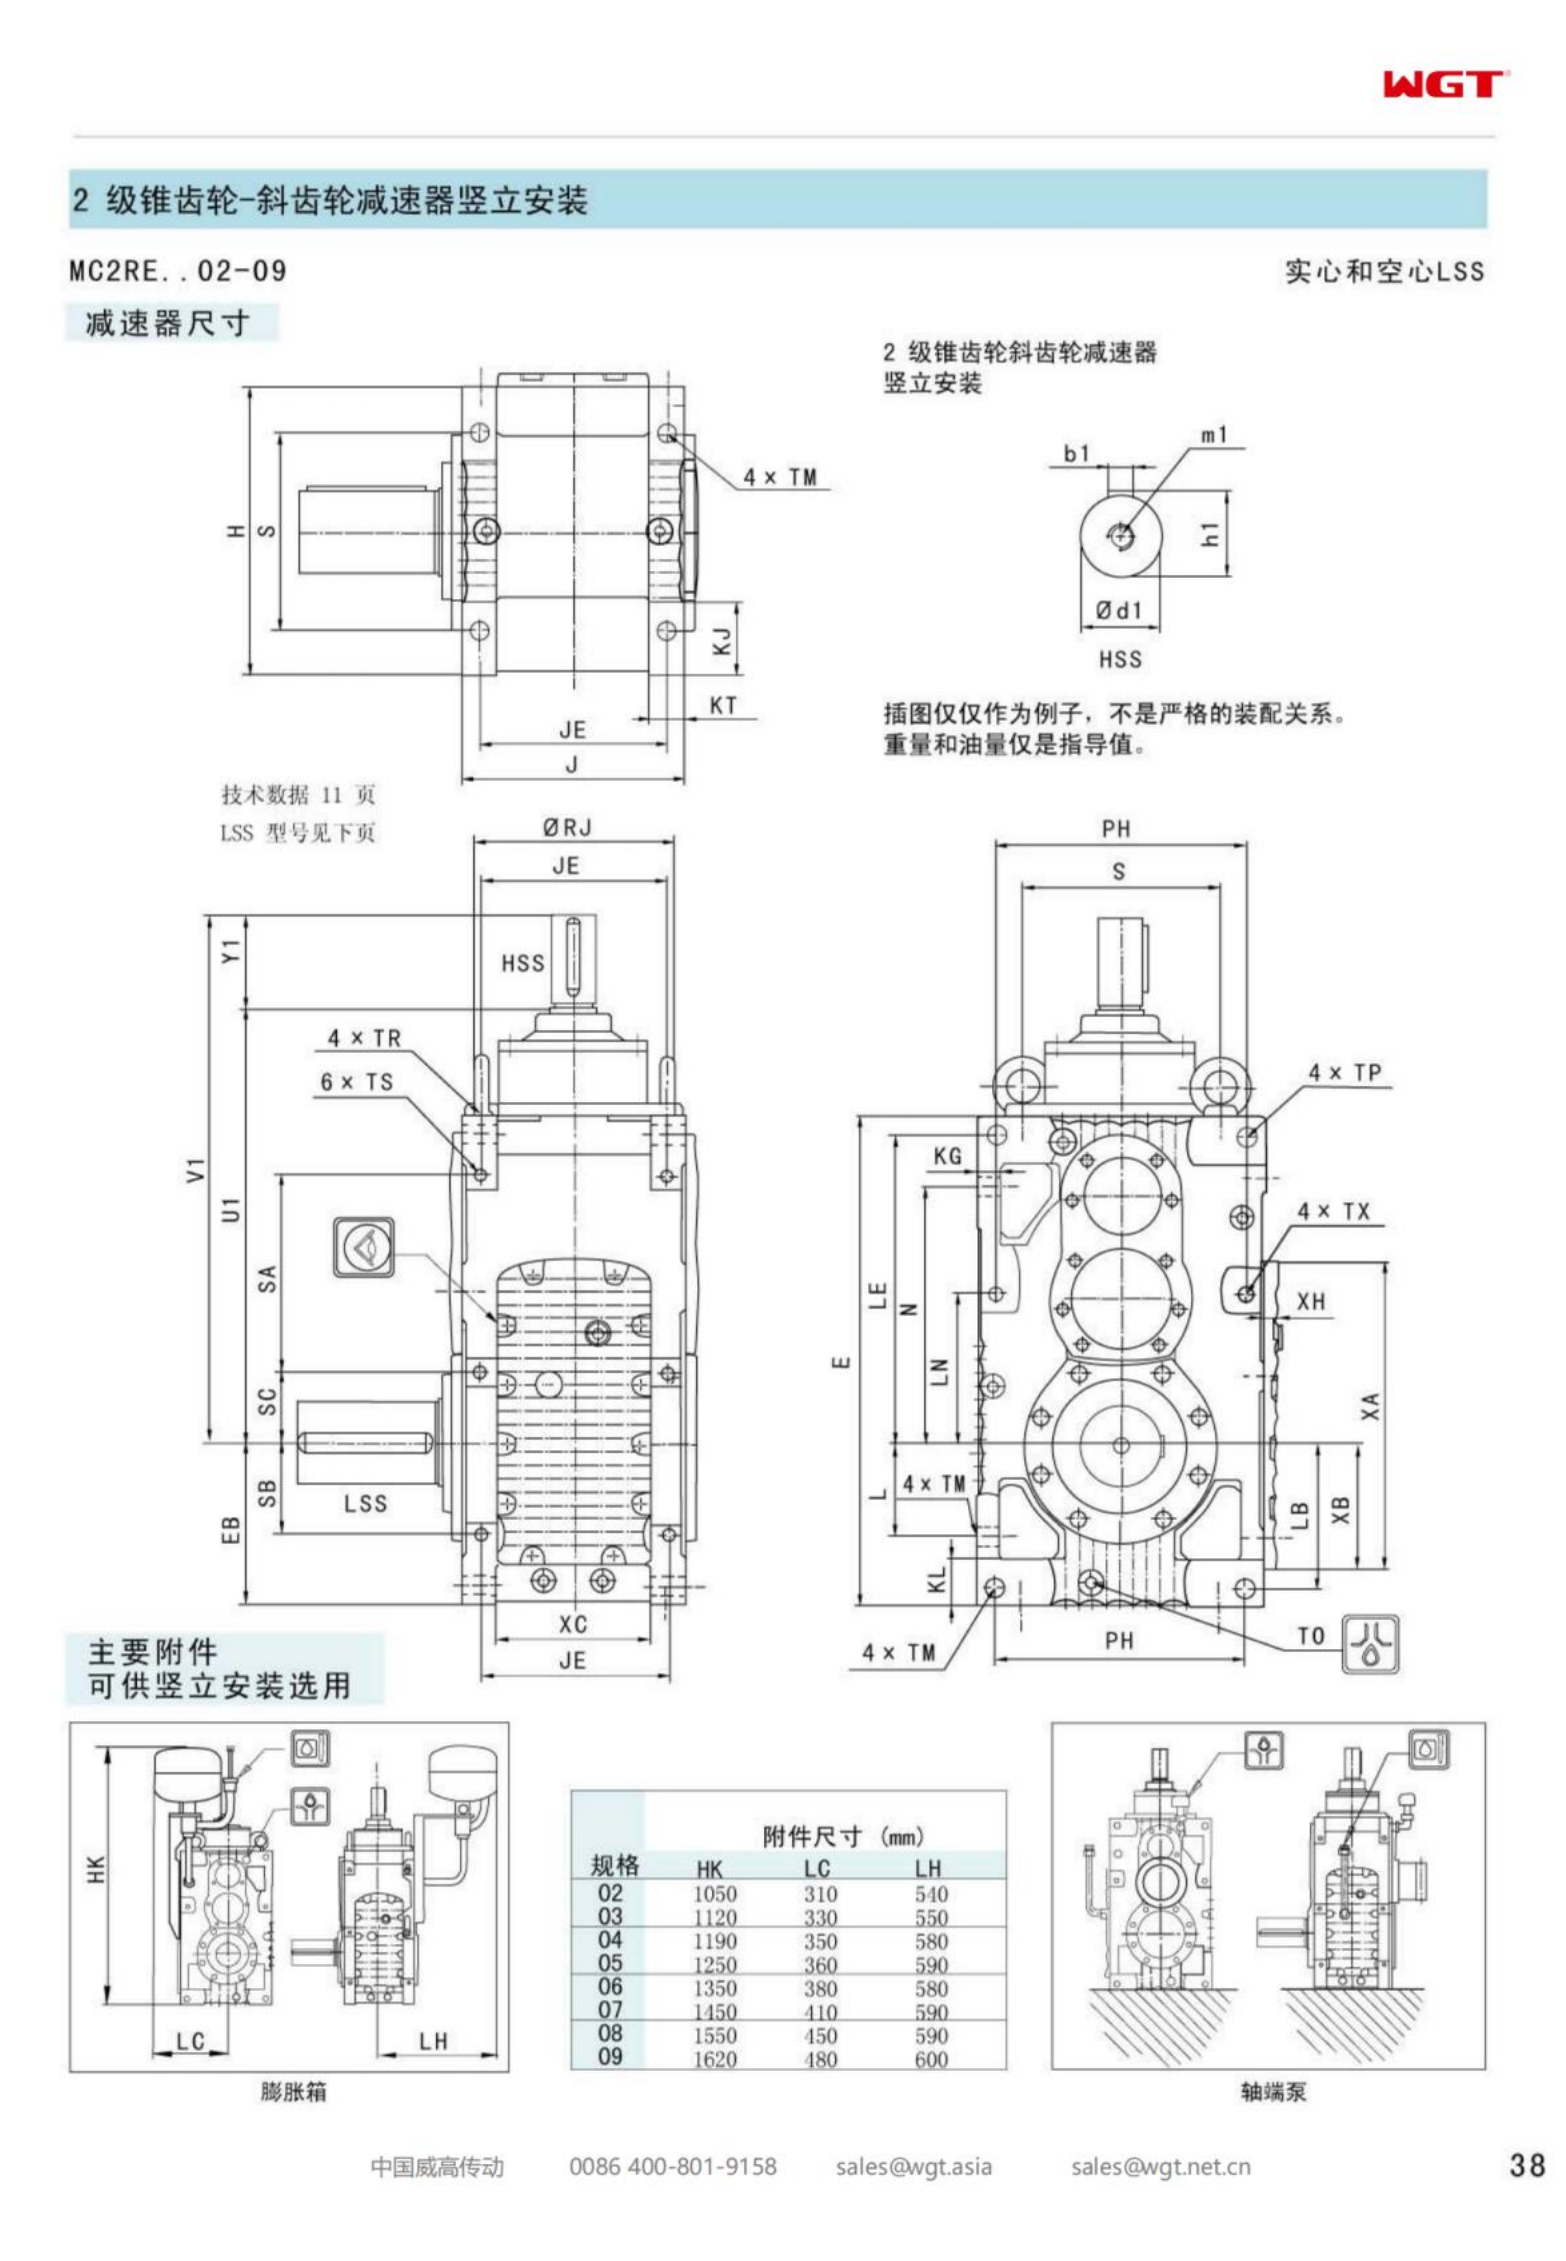 MC2REHF09 replaces _SEW_MC_Series gearbox (patent)